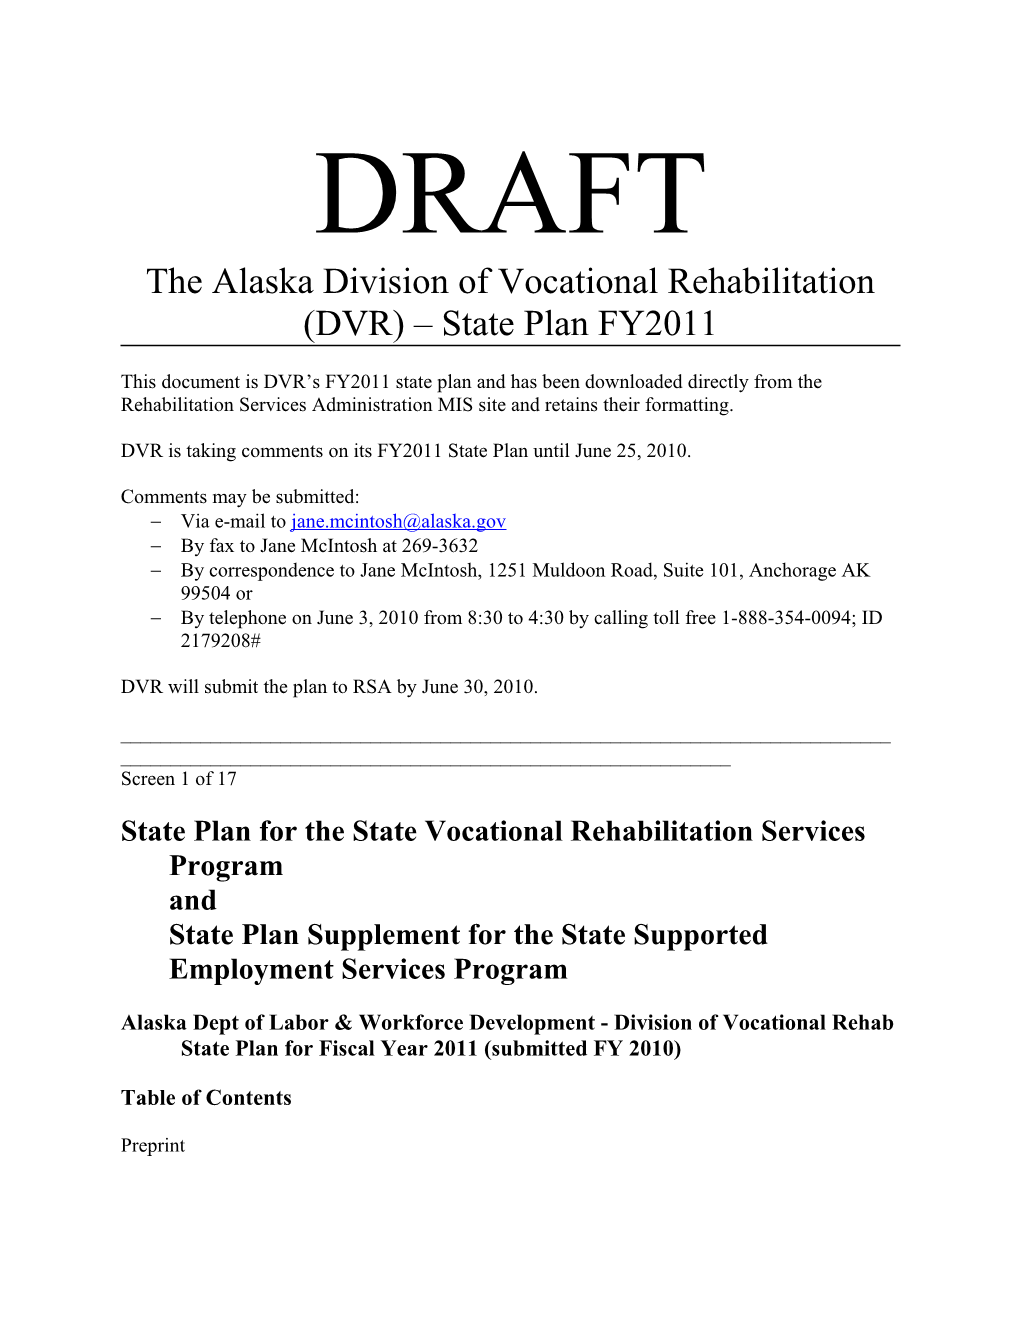 The Alaska Division of Vocational Rehabilitation (DVR) State Plan FY2011